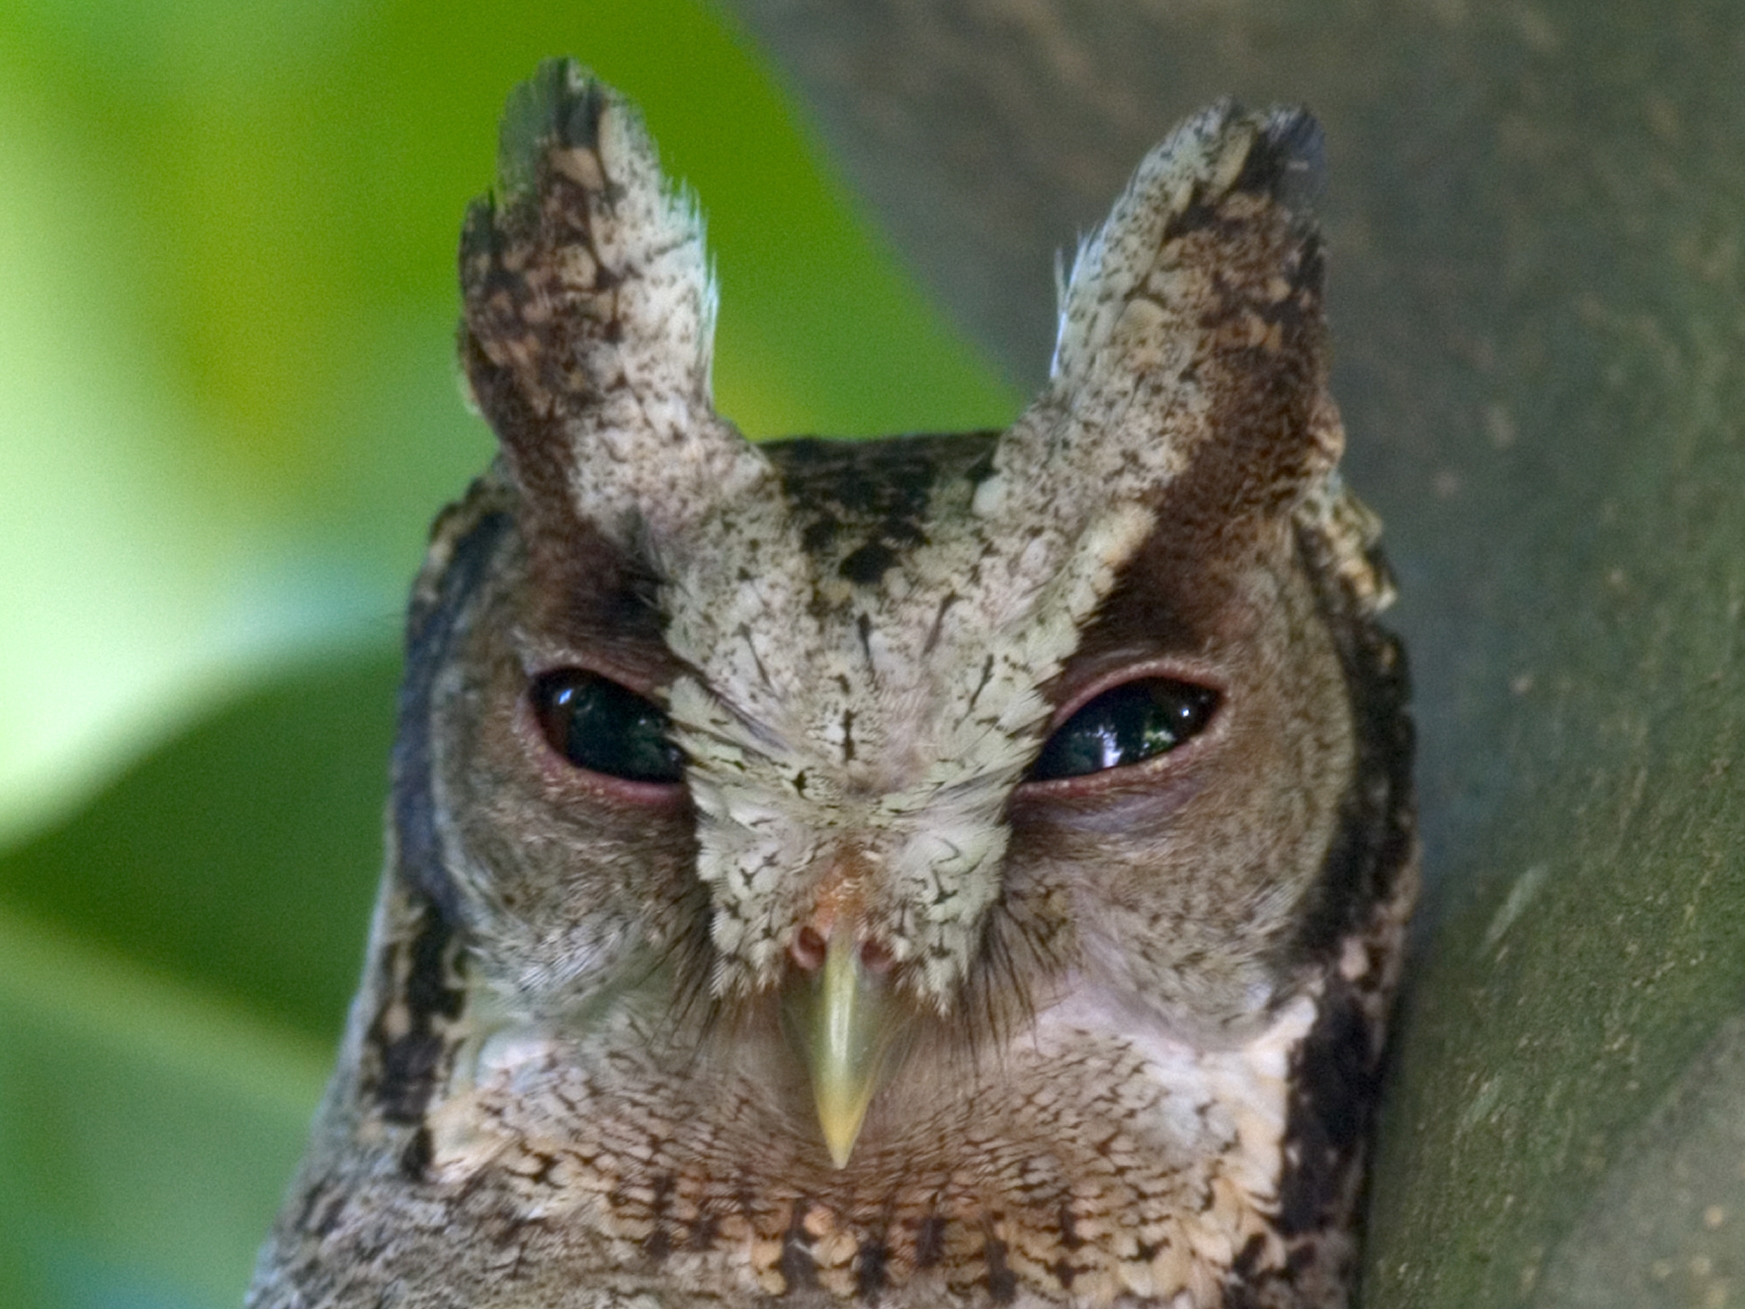 Collared Scops Owl